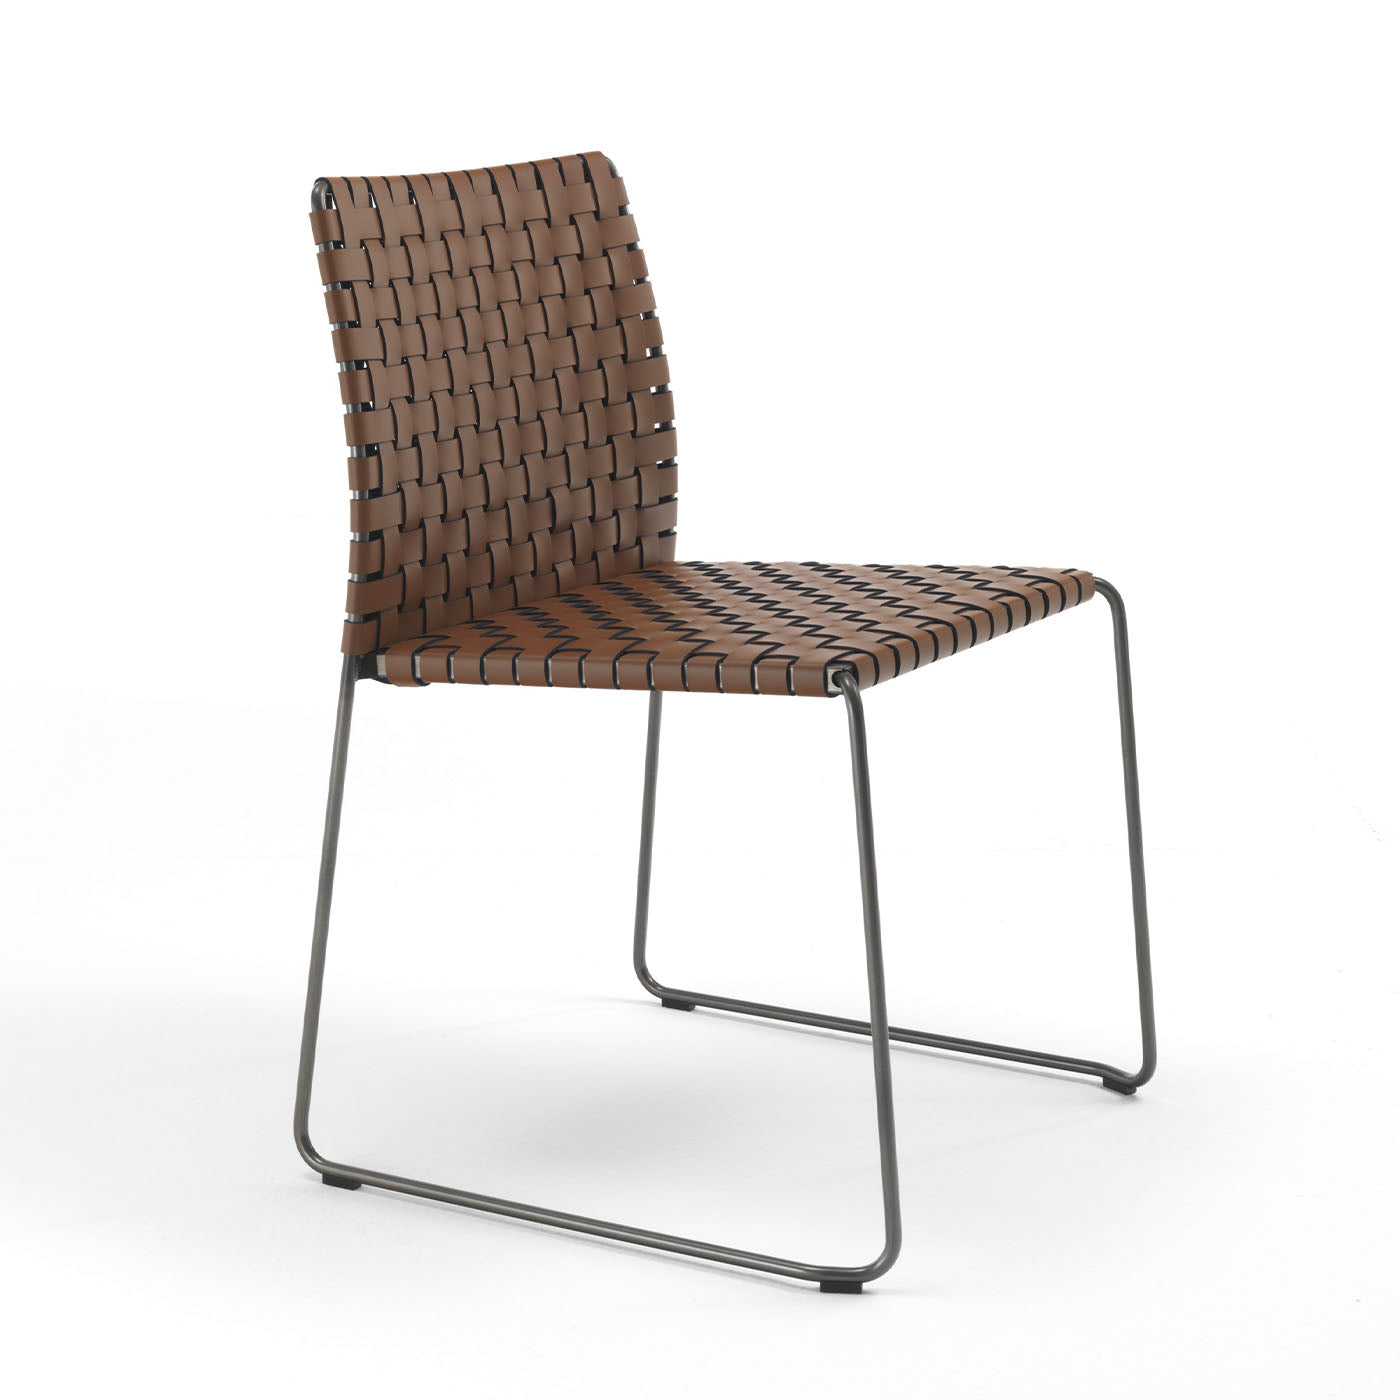 Bizzy Brown Woven Chair - Alternative view 2